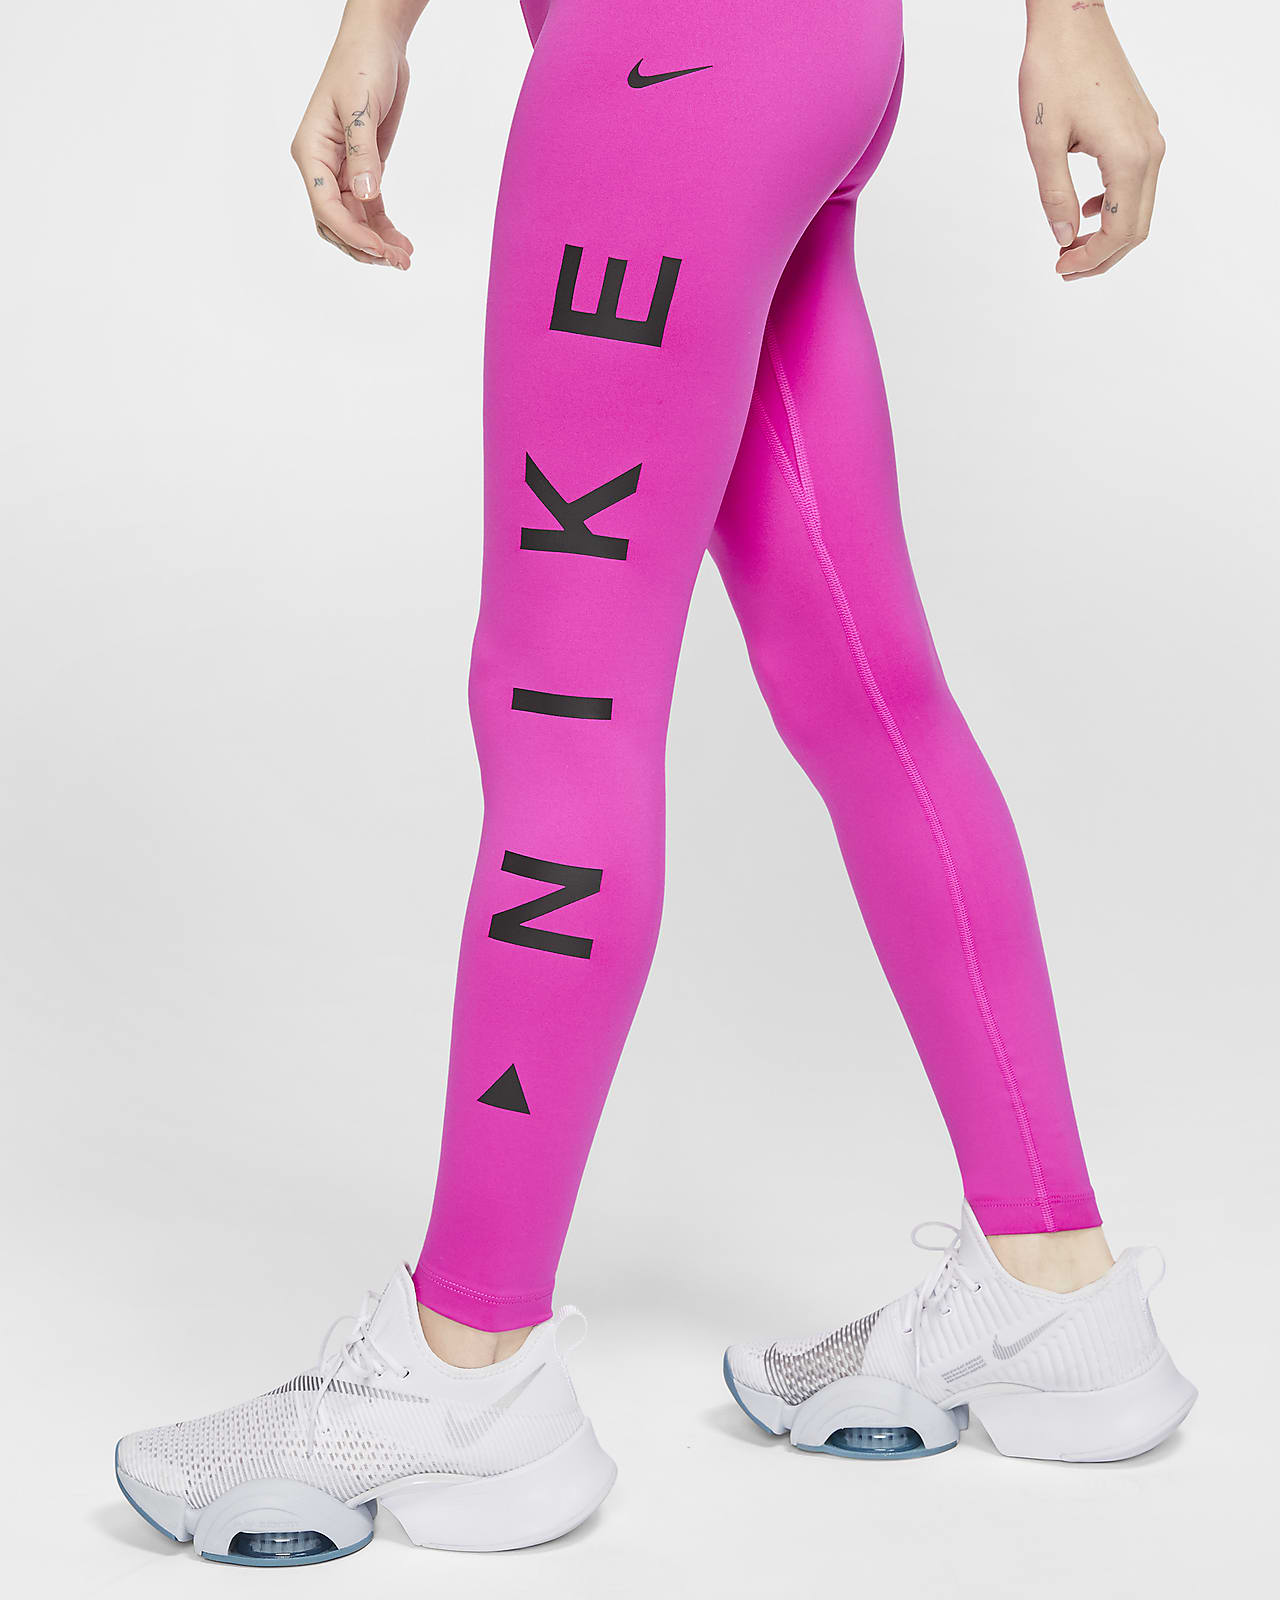 nike women's graphic leggings